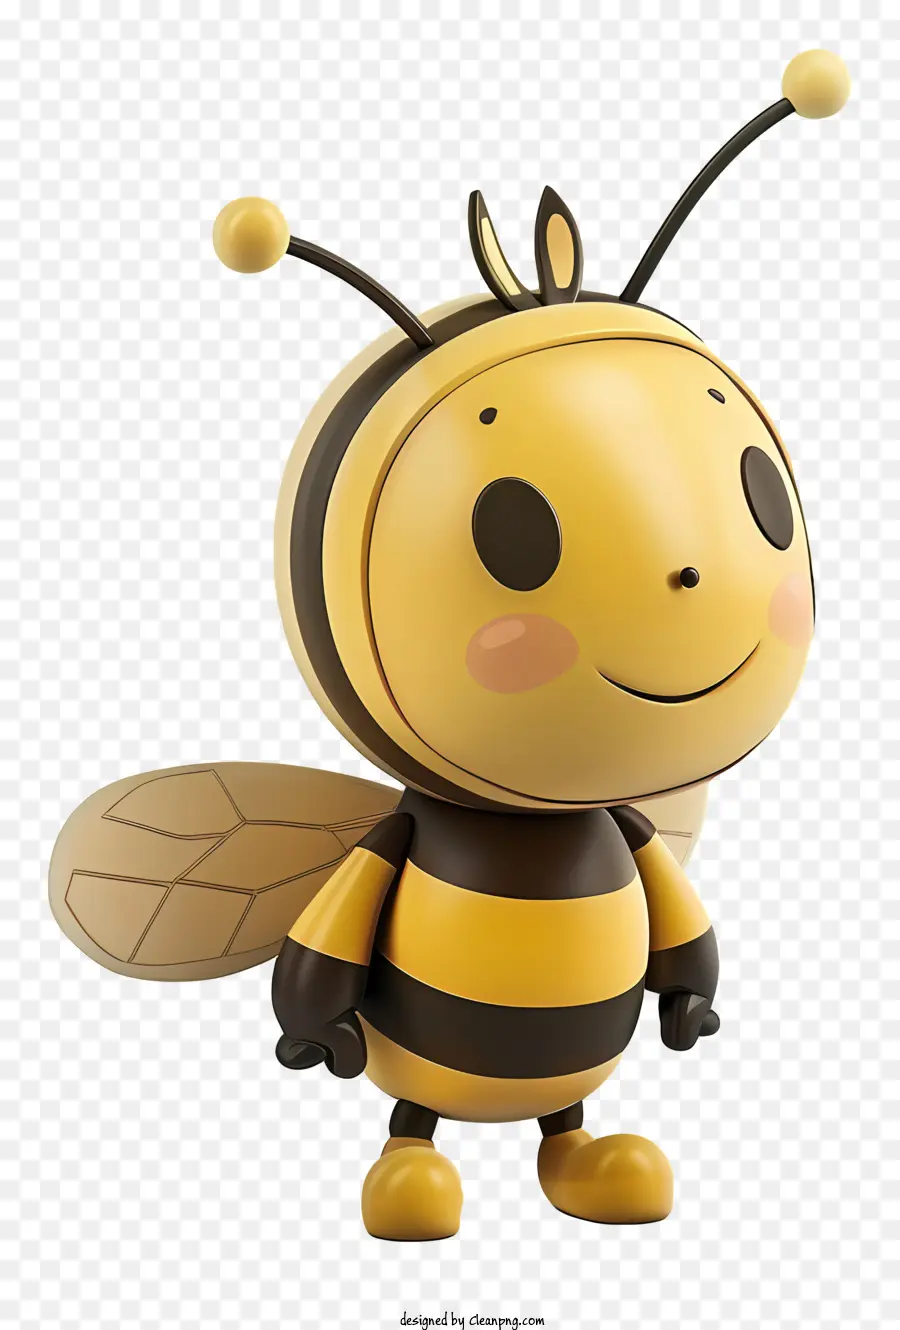 Maya die Biene Bumblebee Toy Plastik Figur Figur Bienencharakter lustiges Spielzeug - Plastik Bumblebee Figur mit orangefarbenem Körper